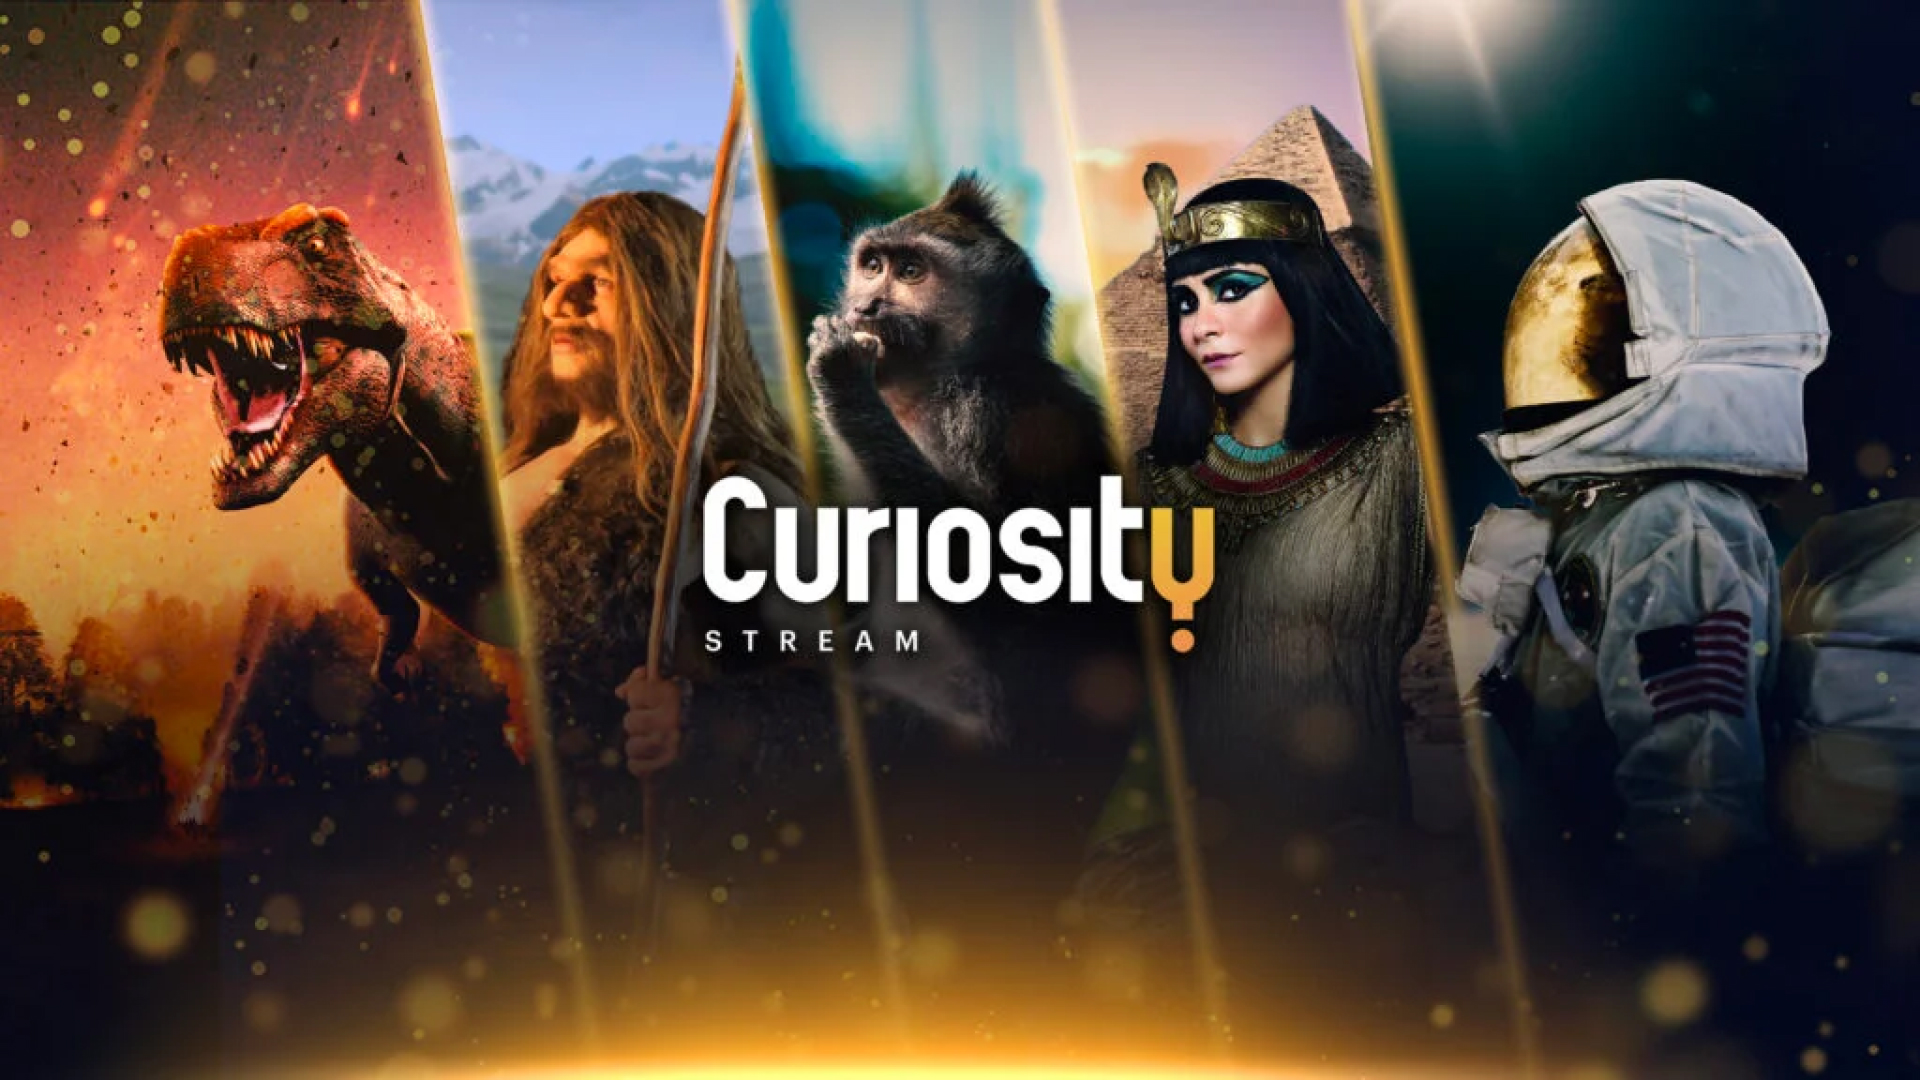 How to Get Curiosity Stream Free?